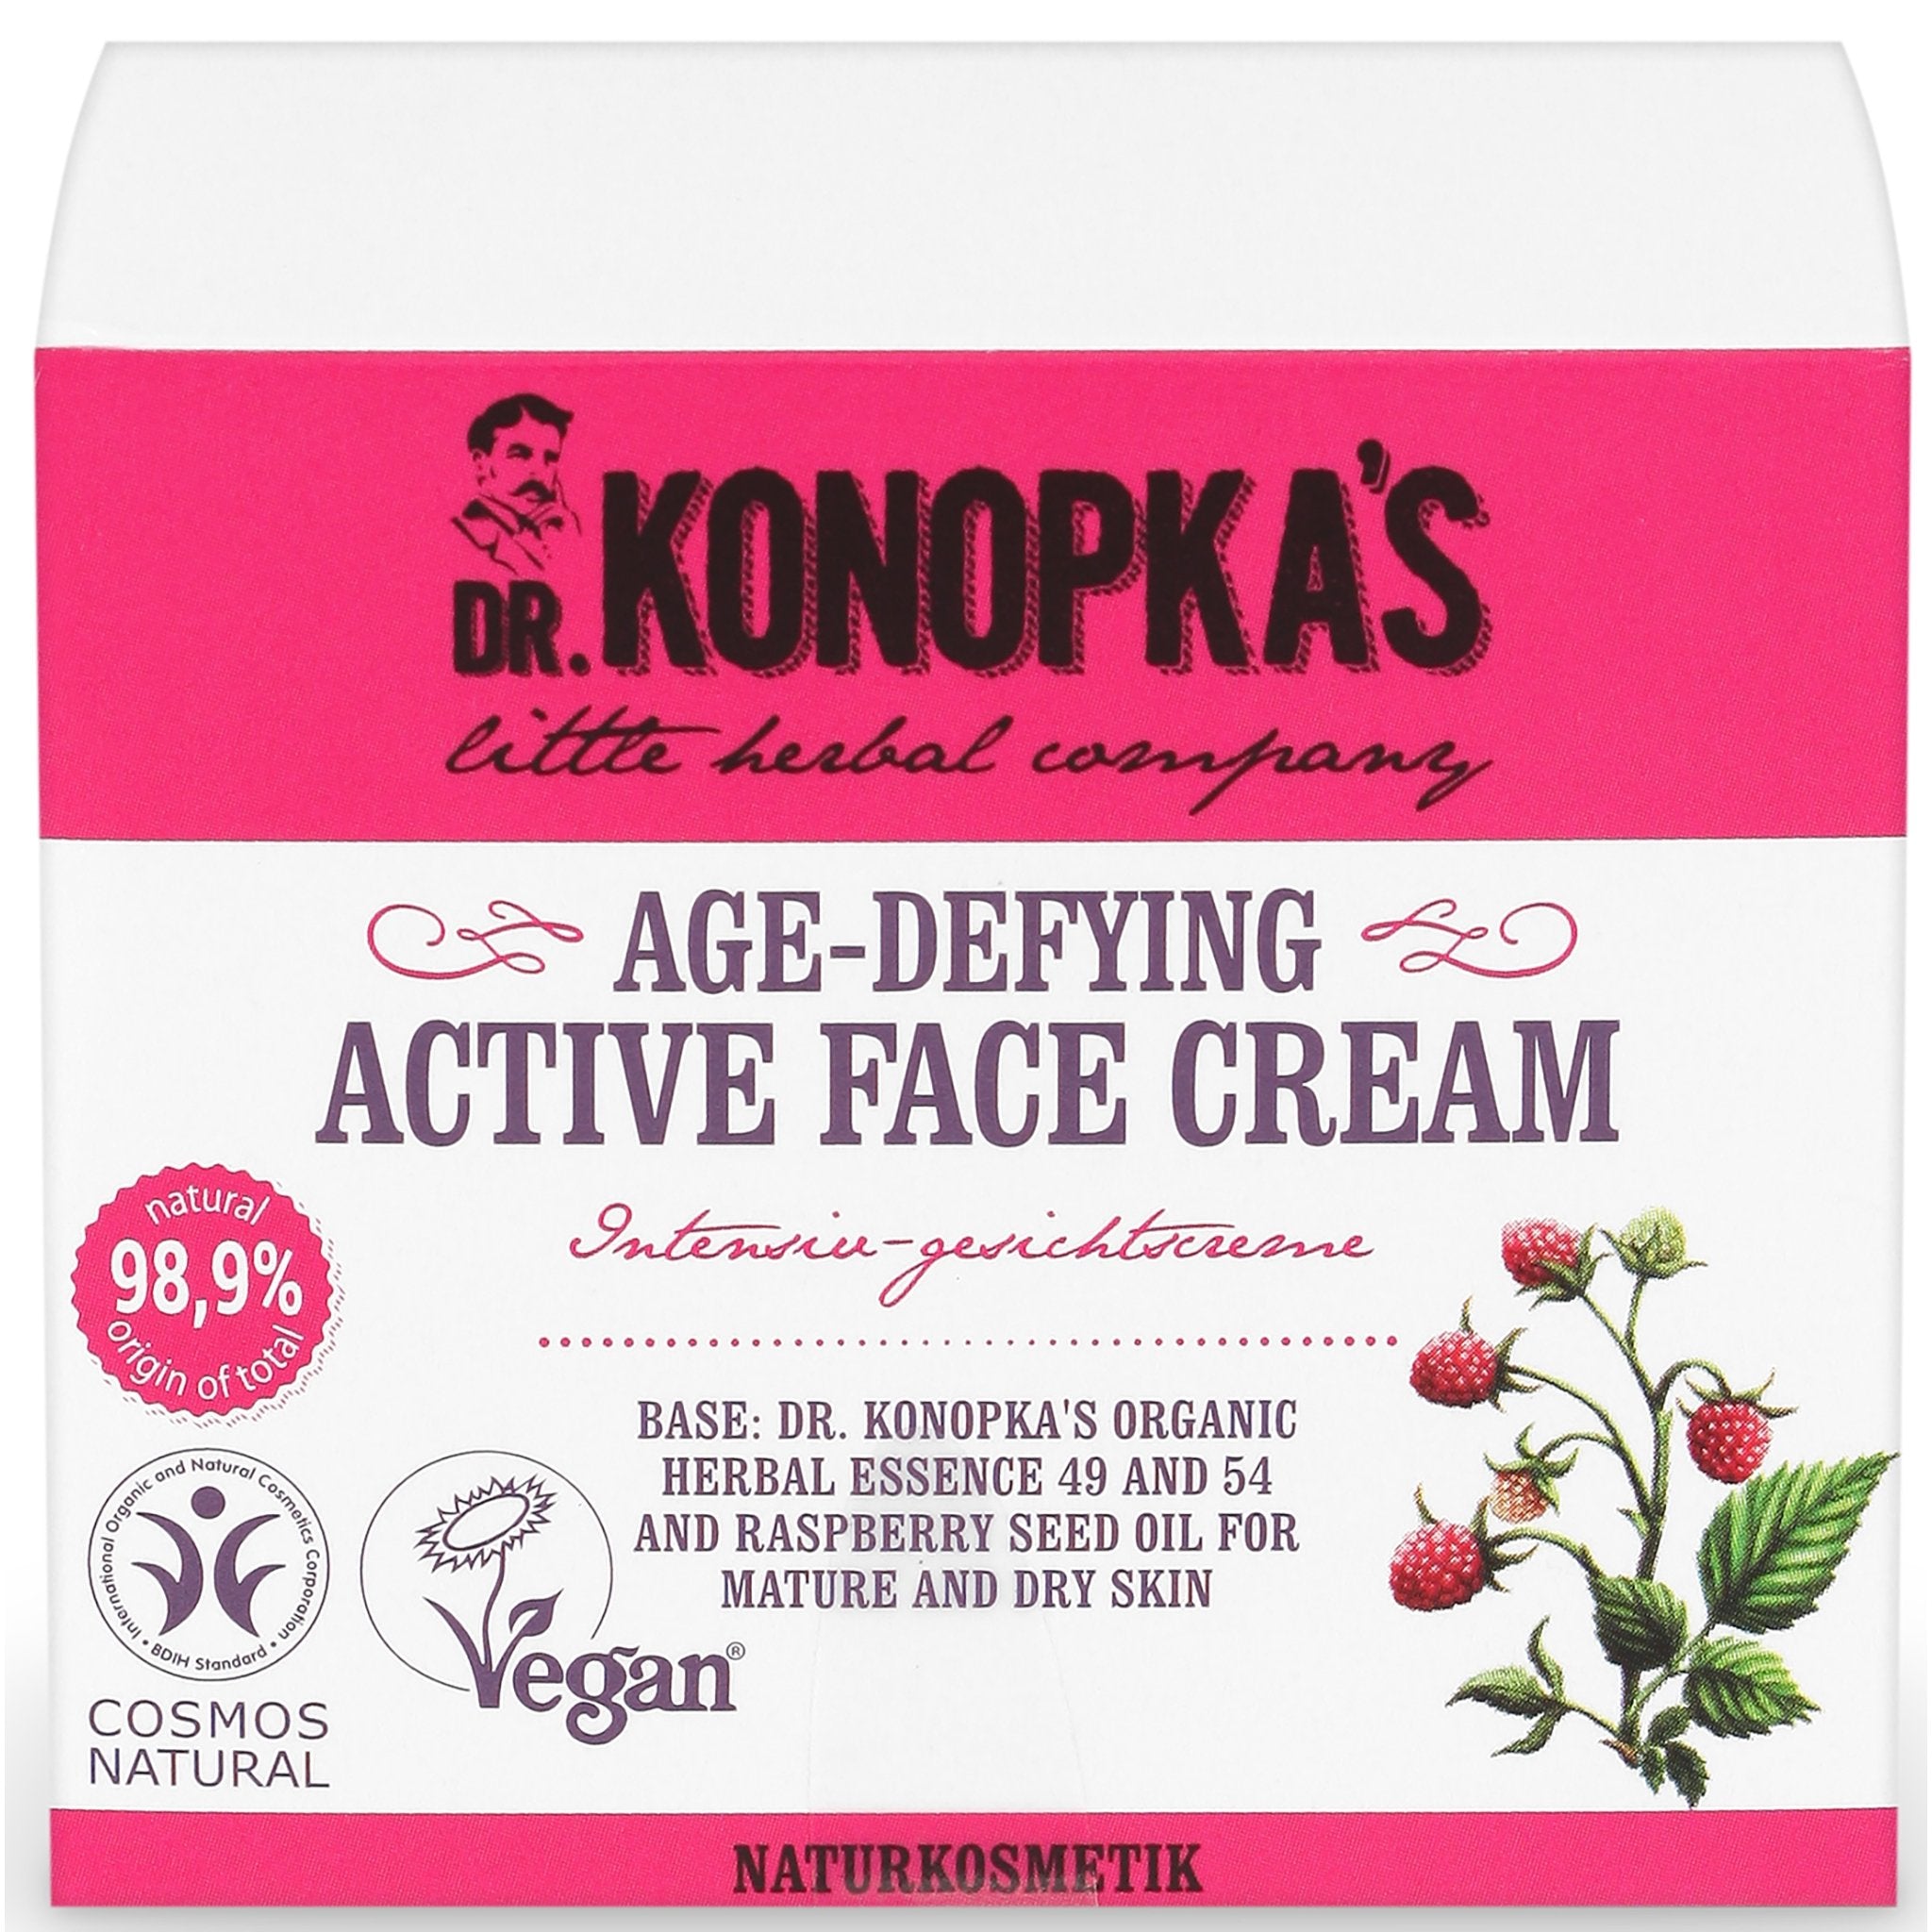 Active Age-Defying Face Cream - mypure.co.uk